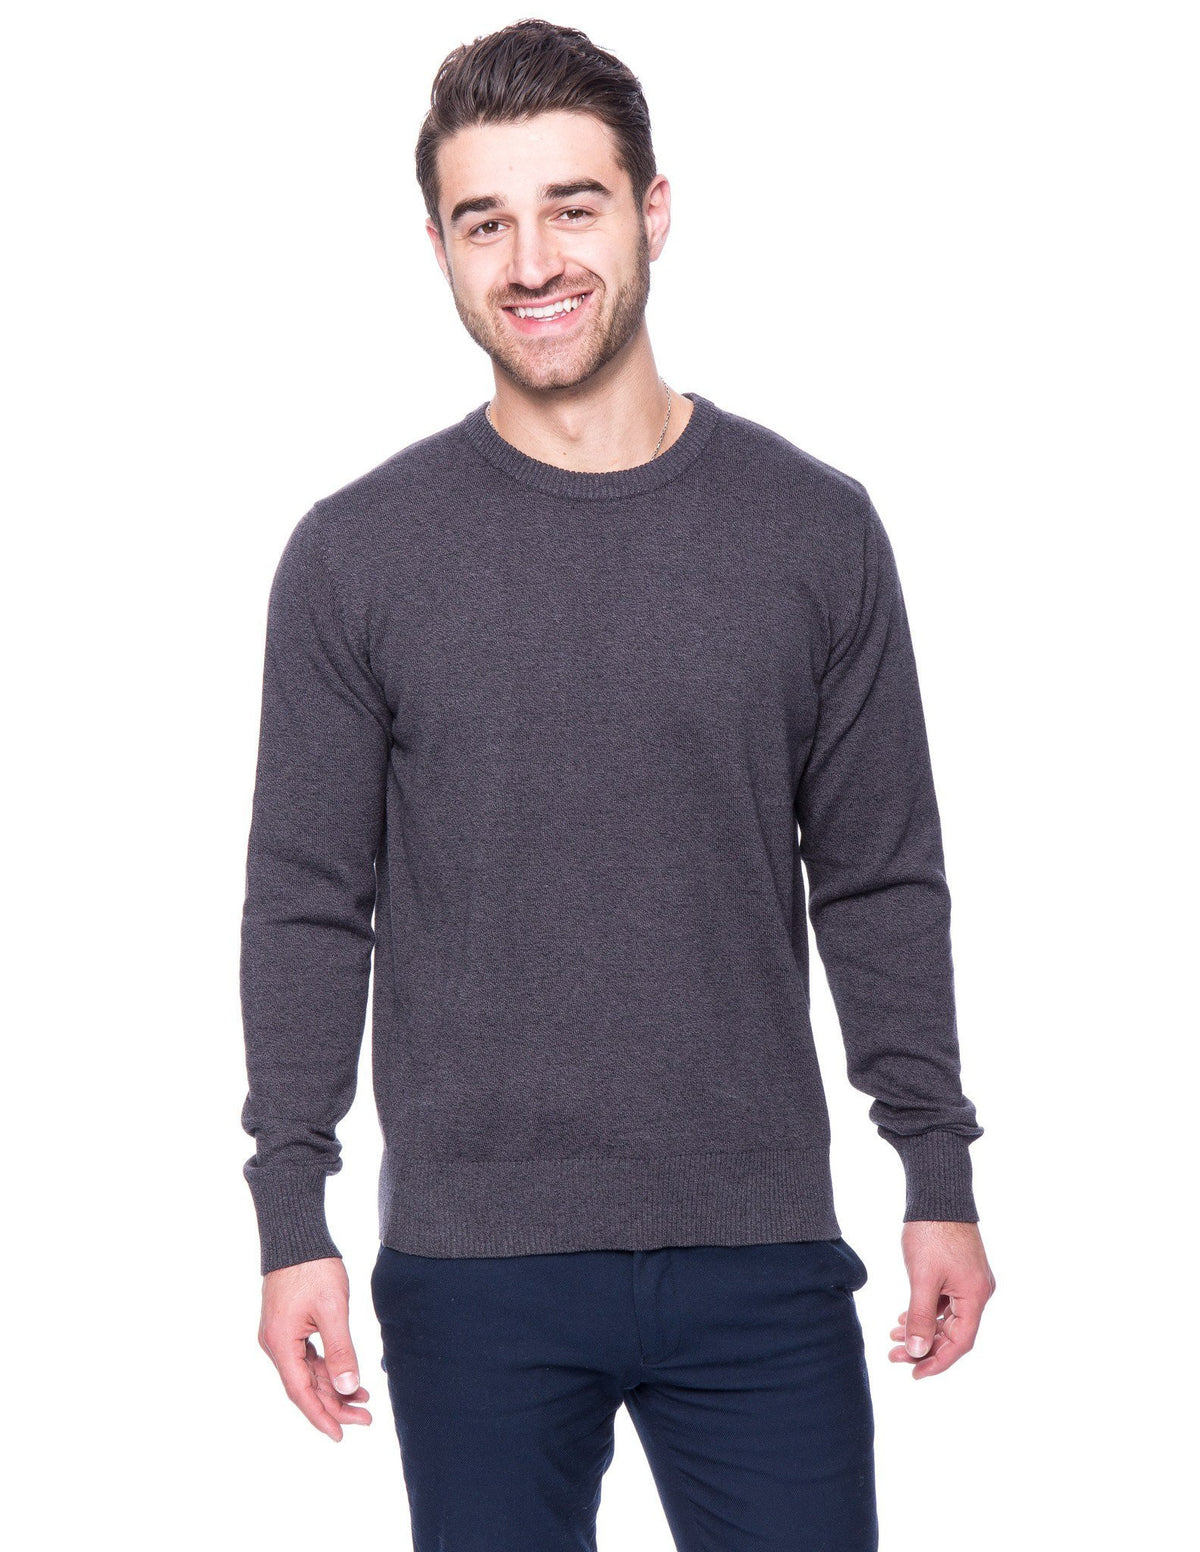 Men's 100% Cotton Crew Neck Sweater - Marl Charcoal/Black